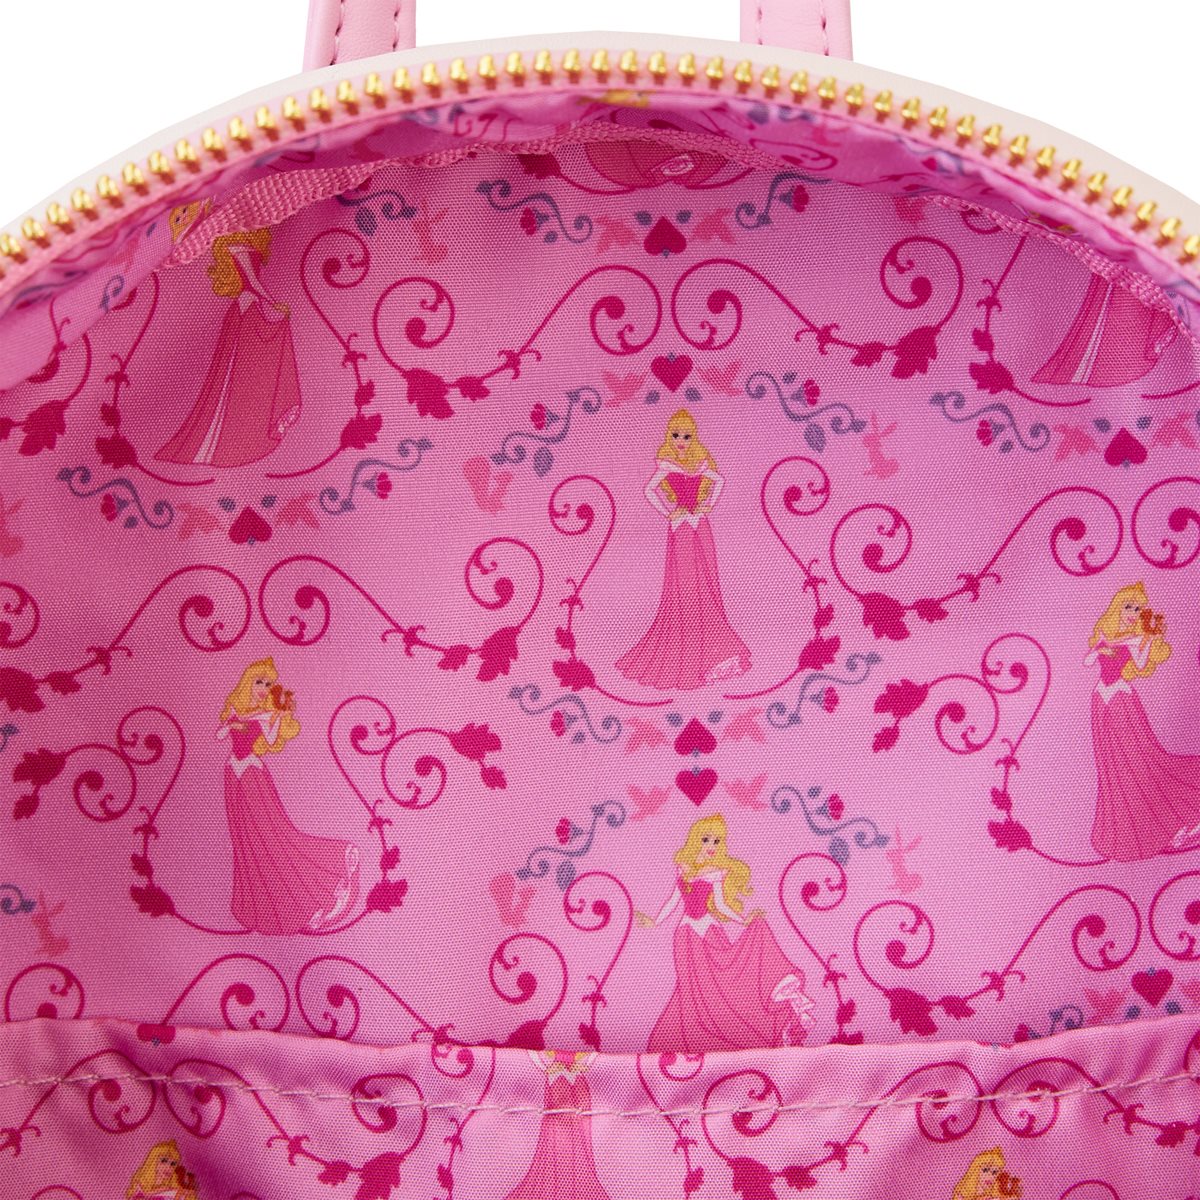 Disney Princess Castle Series Sleeping Beauty Mini Backpack